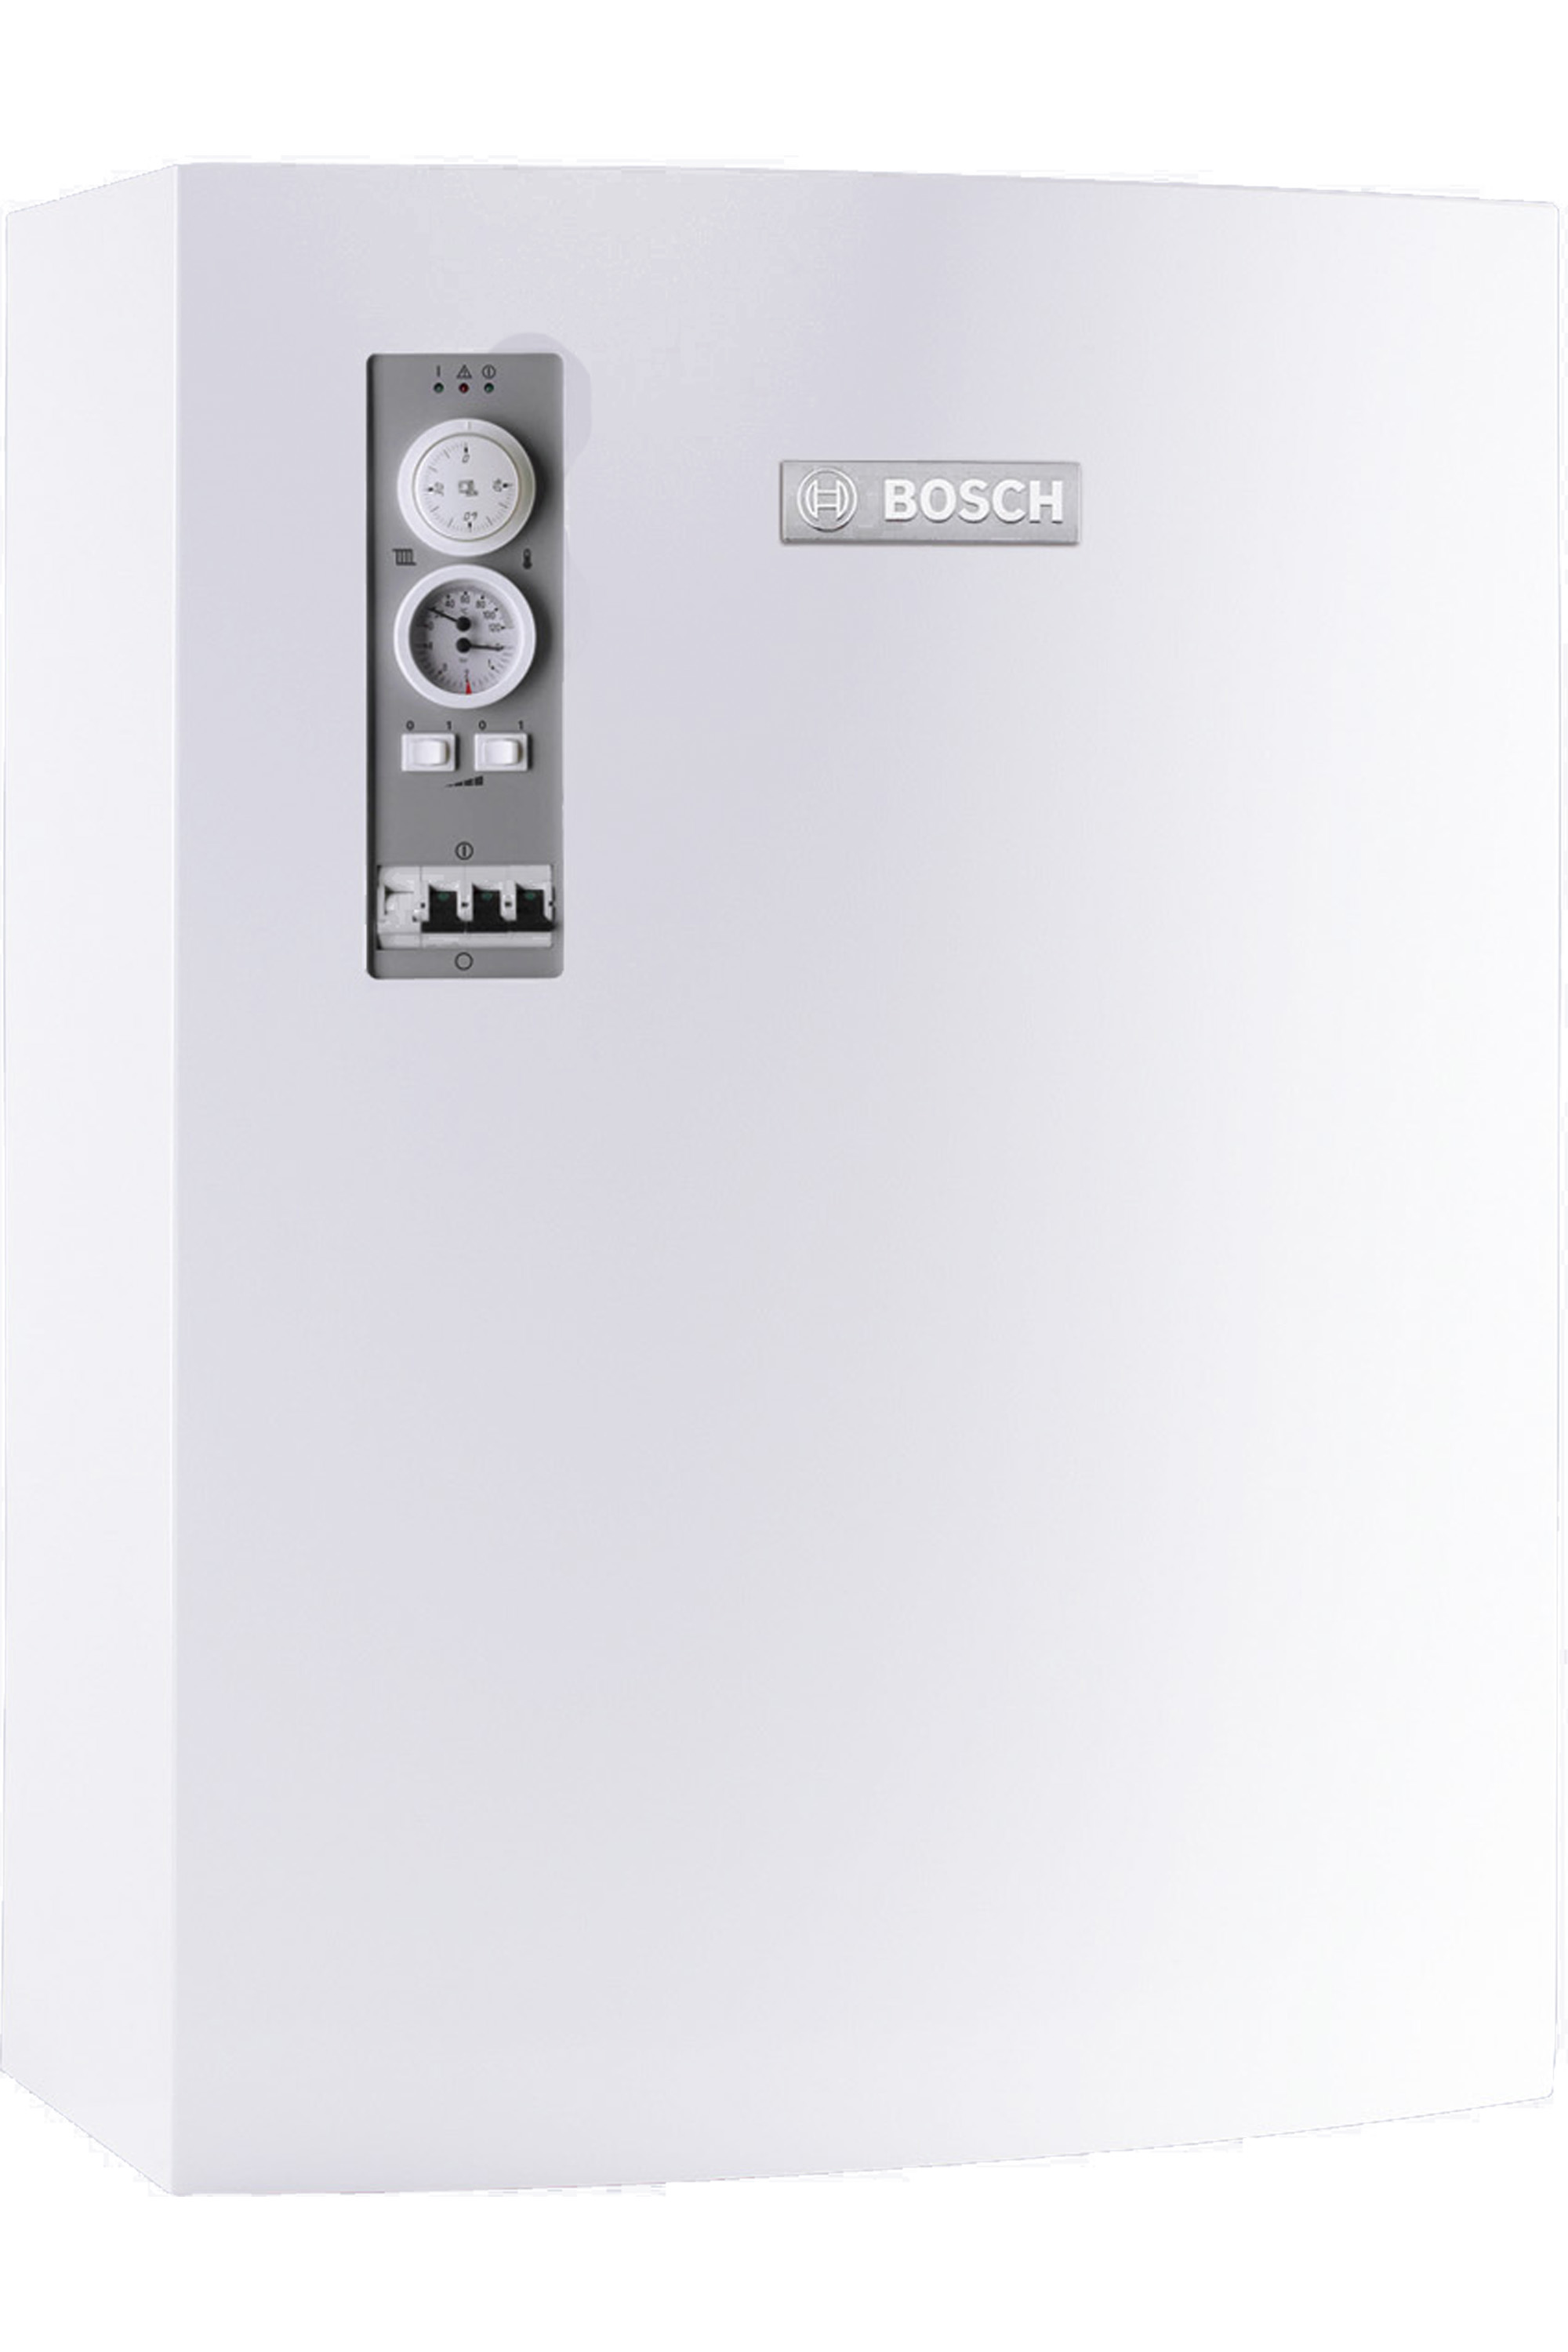 Bosch Tronic 5000 H 60kW